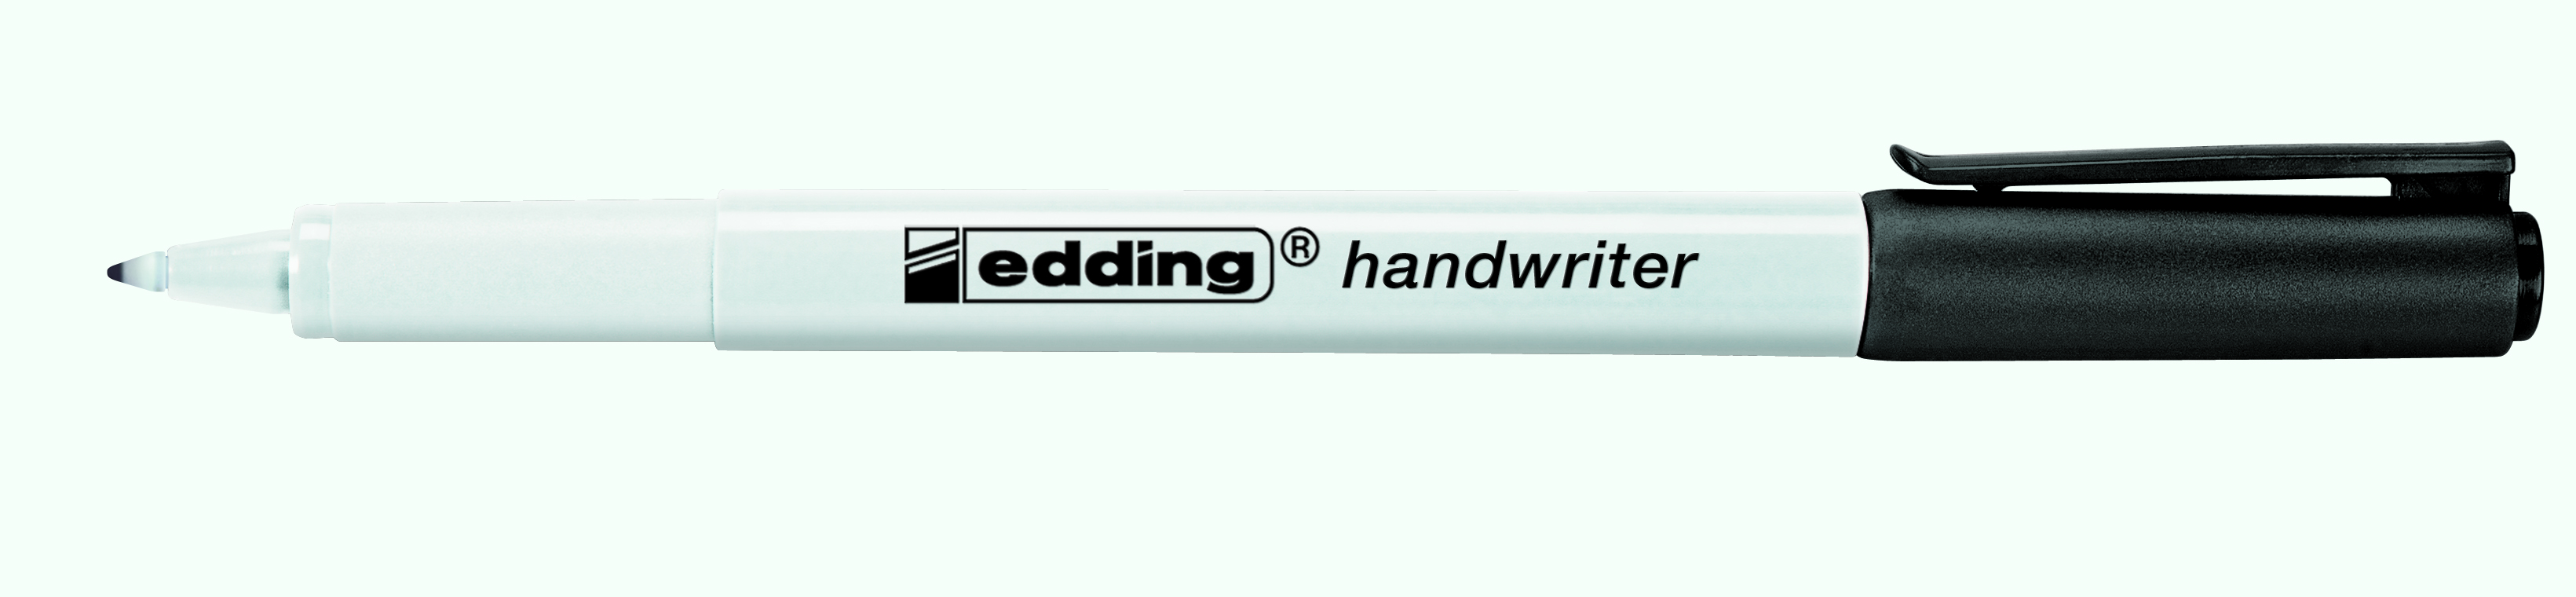 edding handwriter